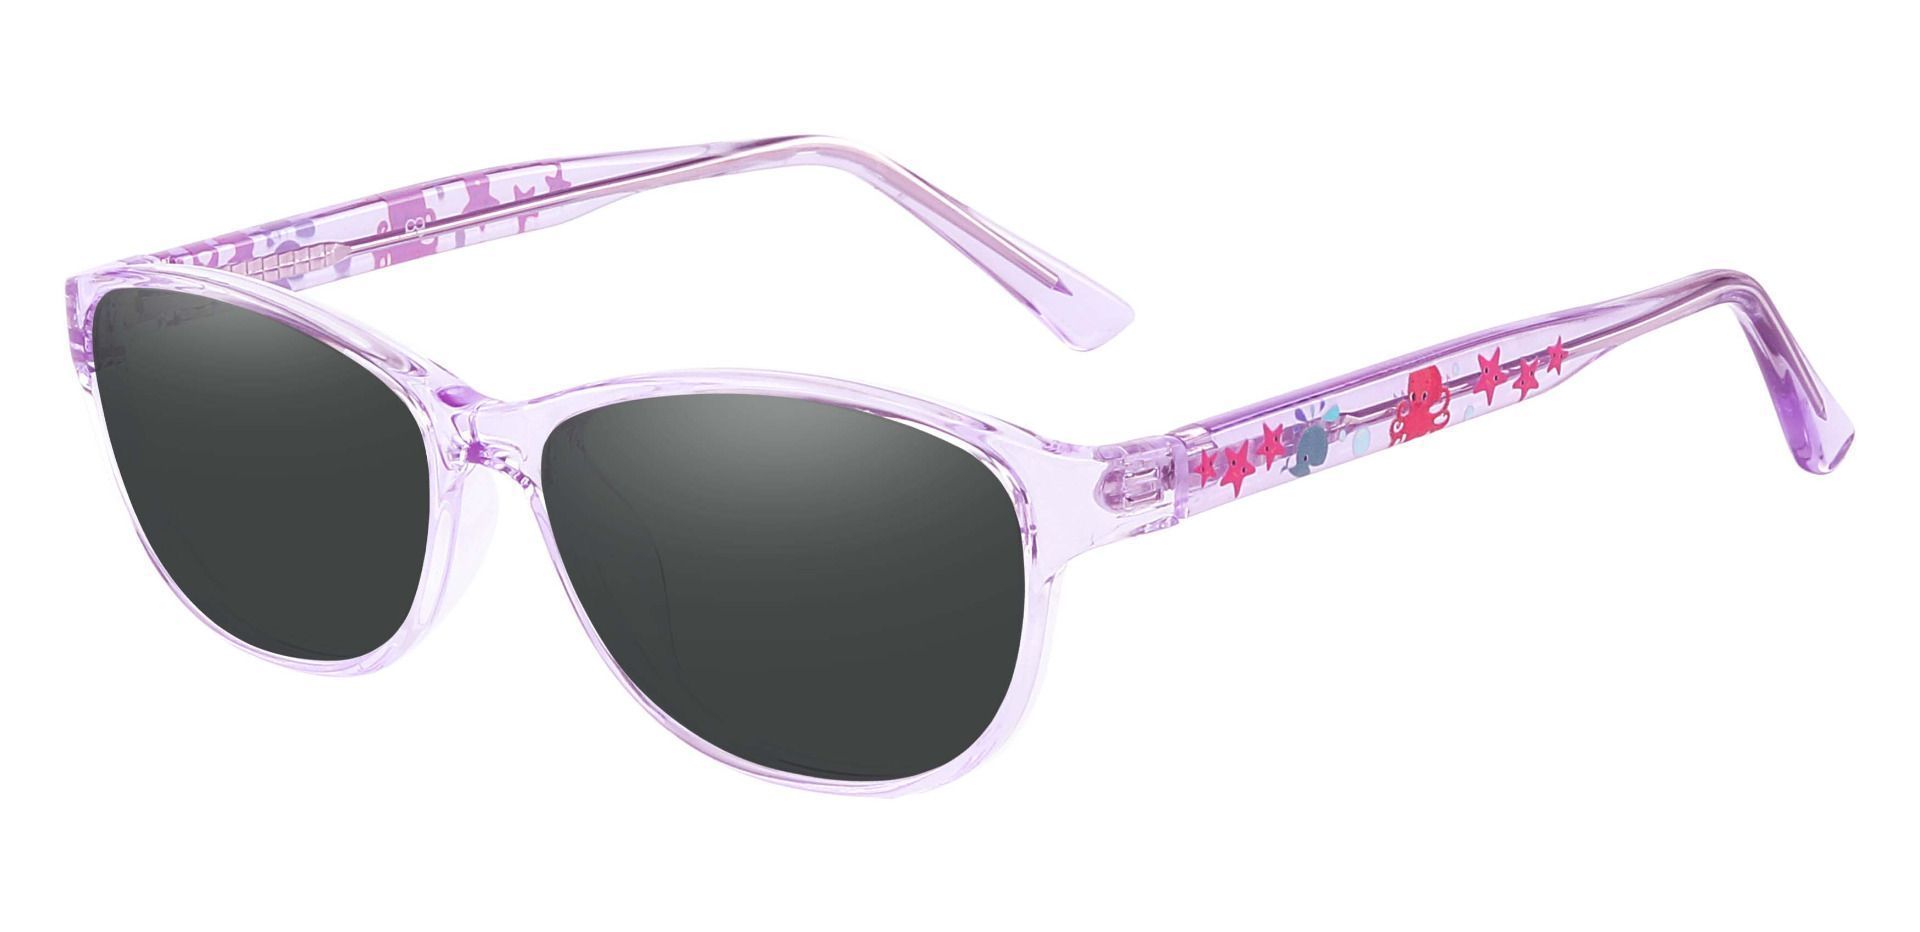 Patsy Oval Progressive Sunglasses - Purple Frame With Gray Lenses